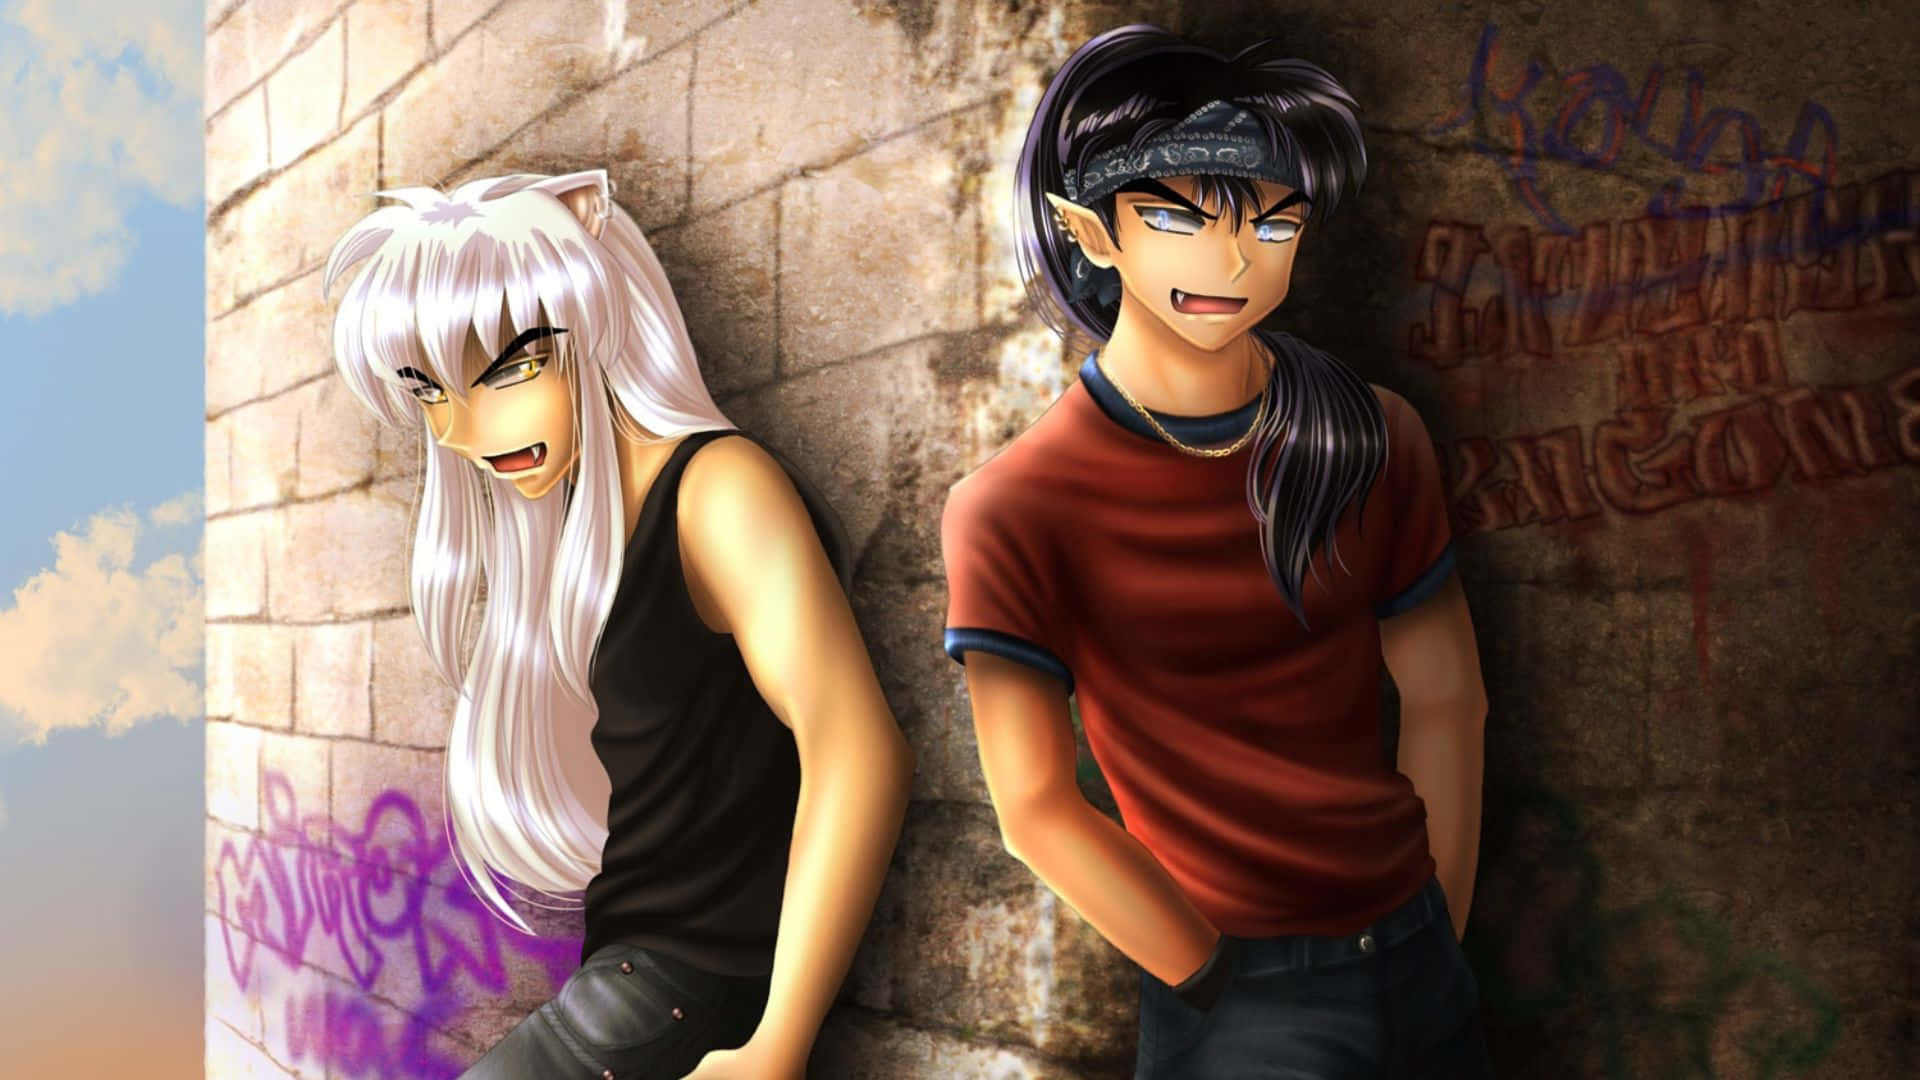 Inuyasha and Koga face off in an intense battle Wallpaper